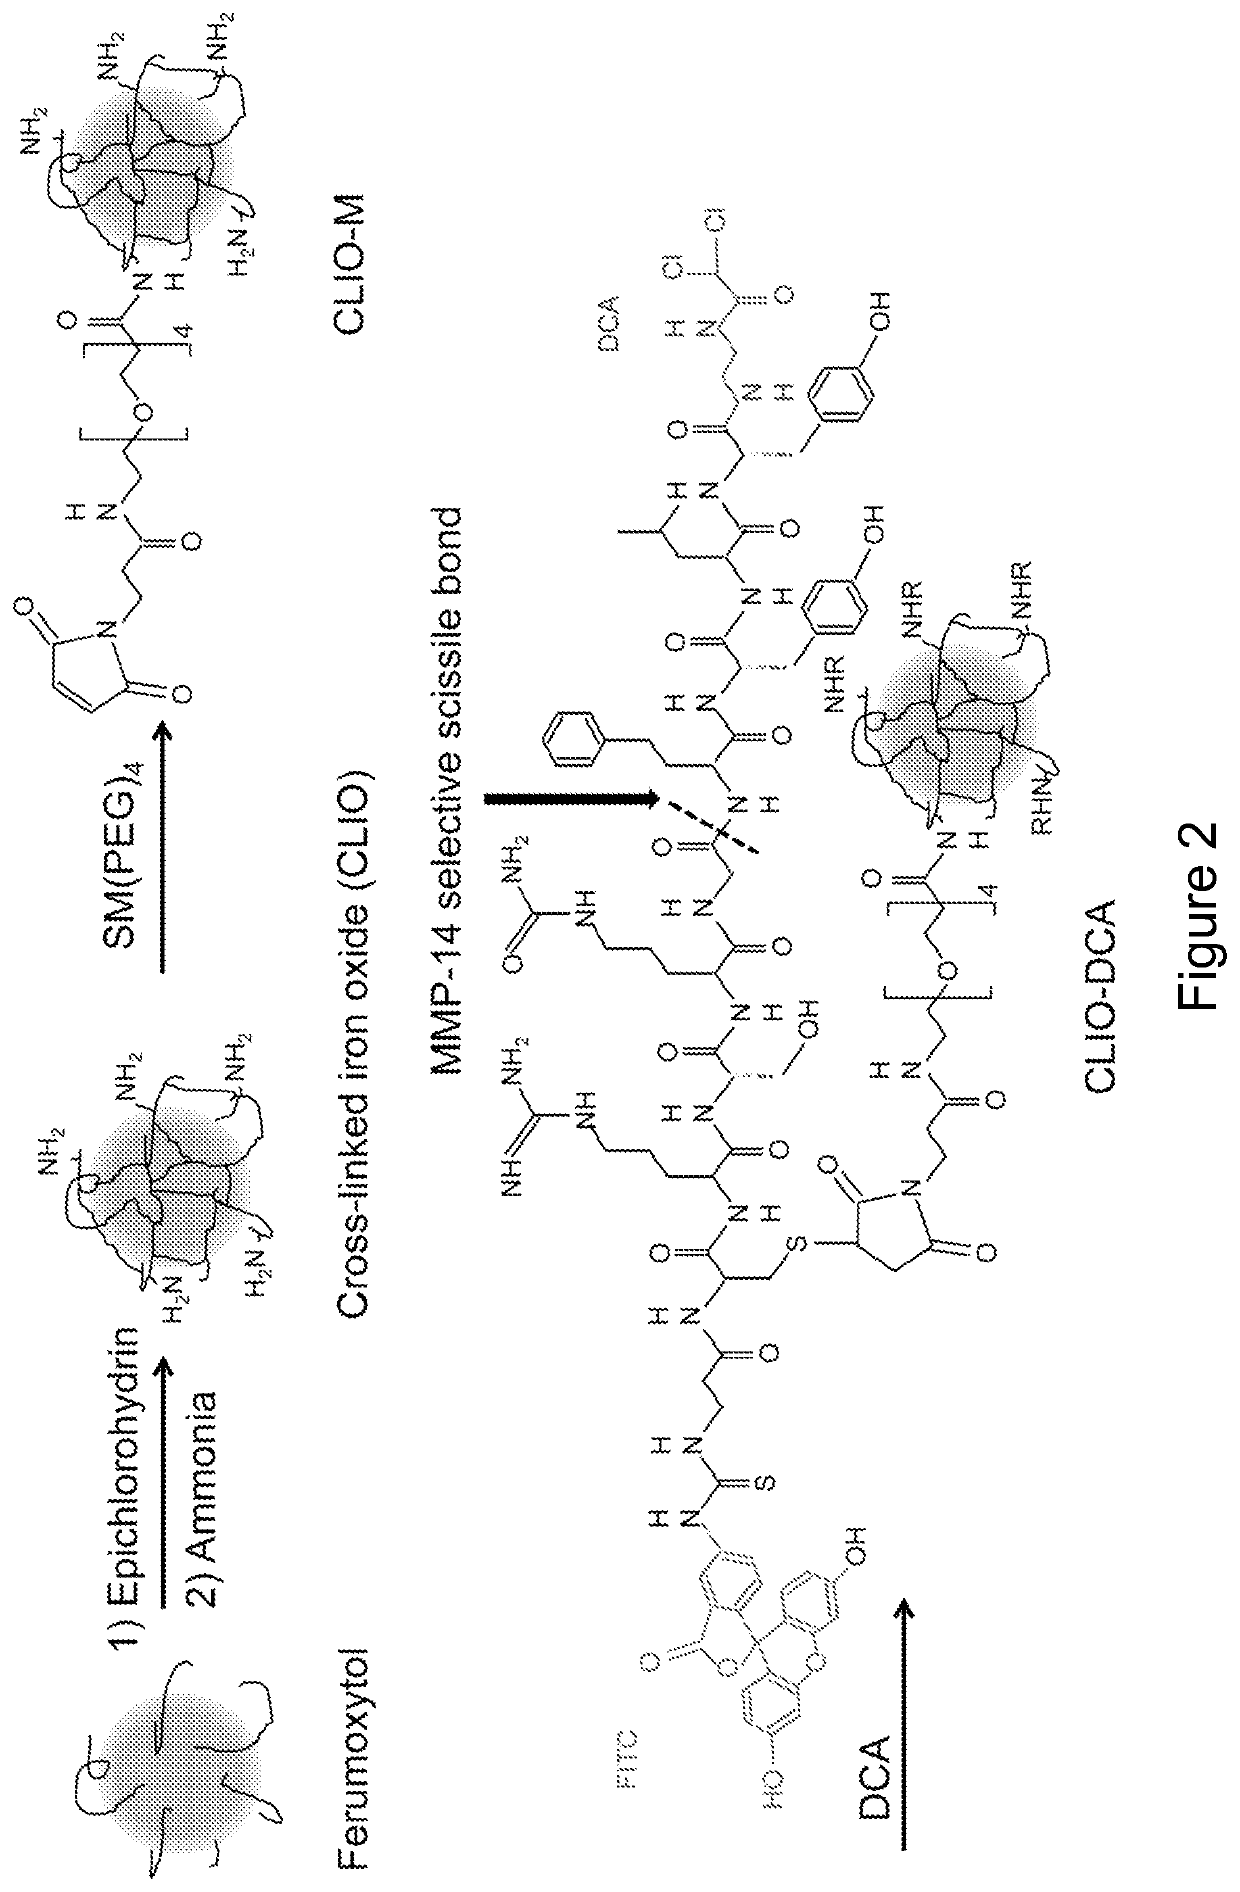 Anti-Warburg Nanoparticles - A matrix metalloprotease activatable conjugate to inhibit glioblastoma proliferation